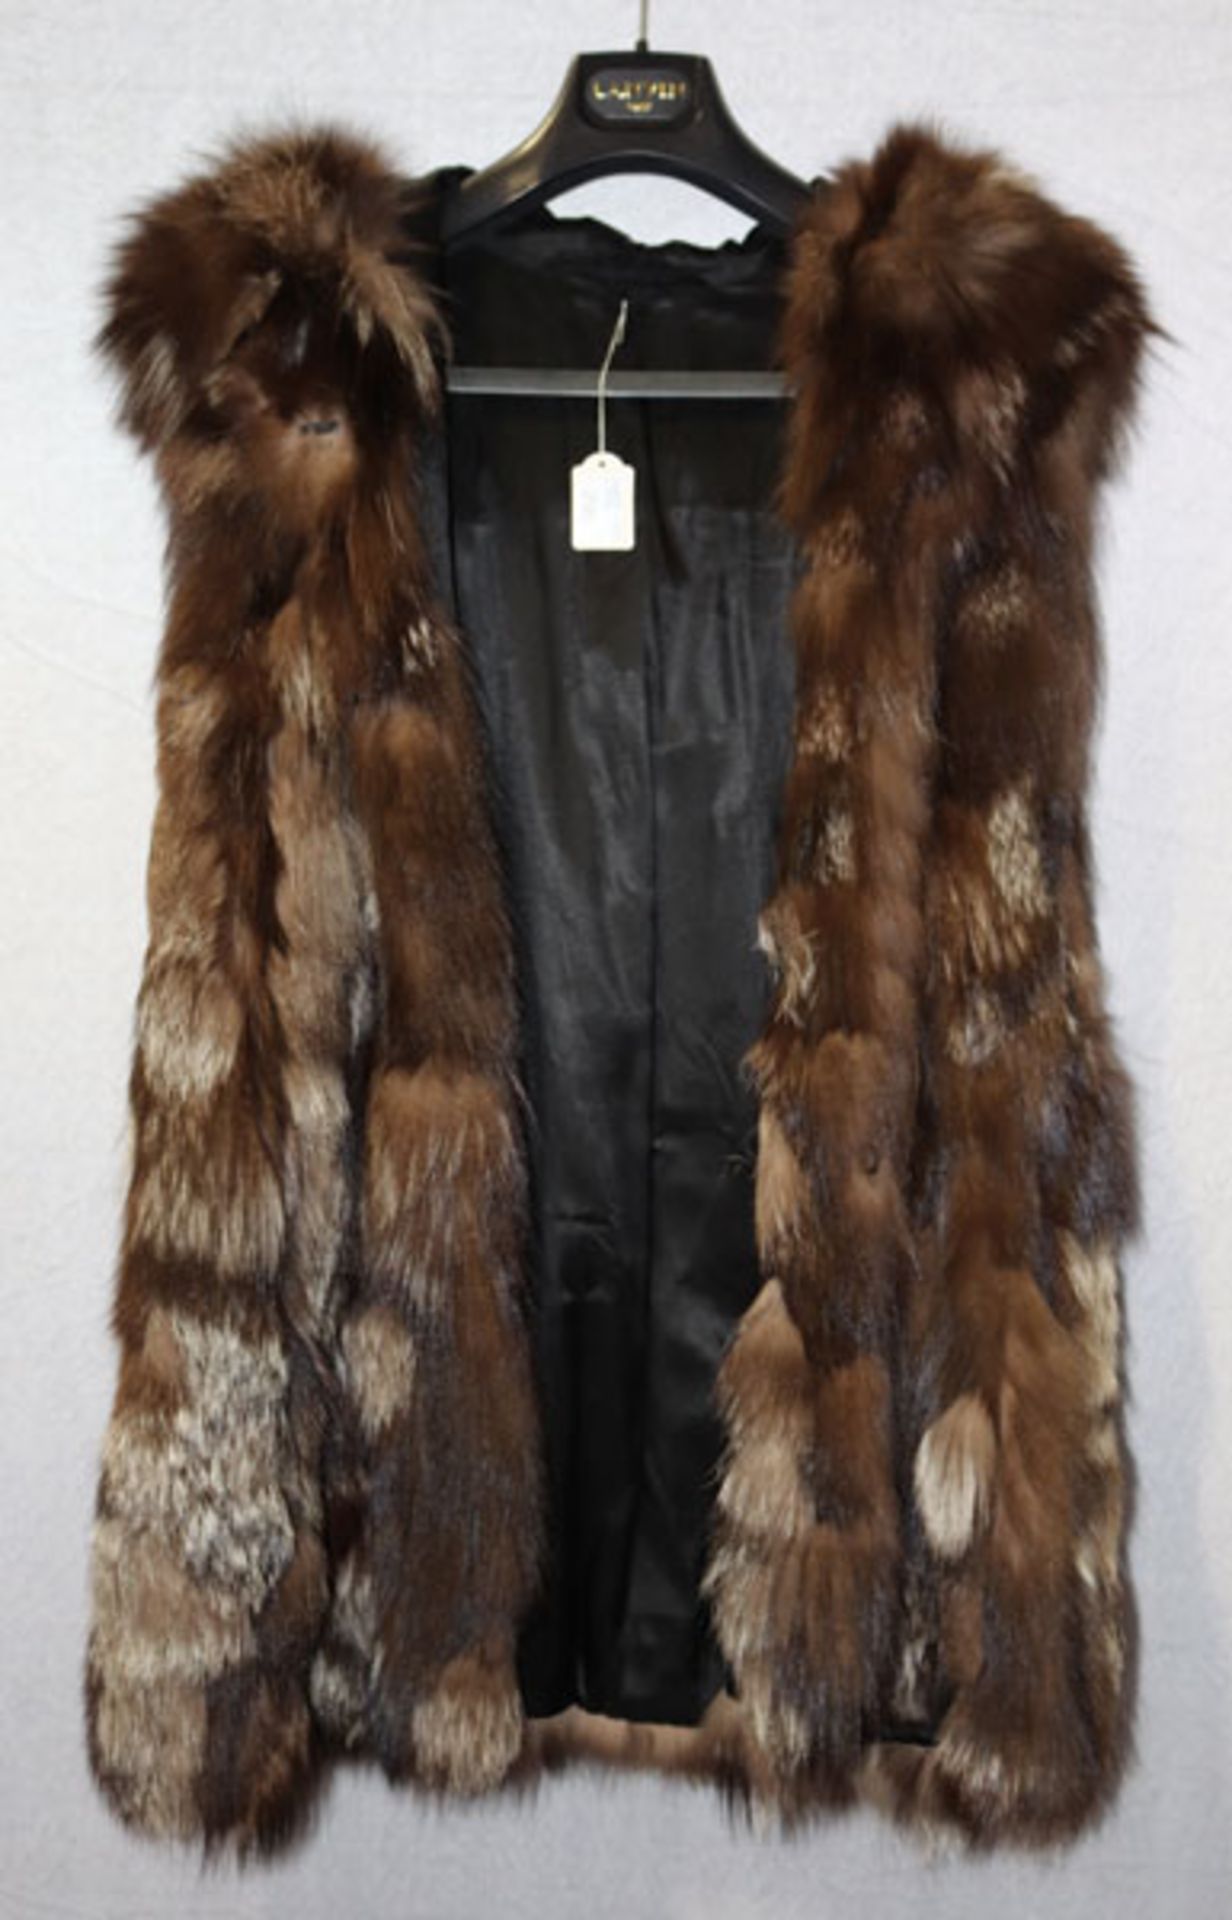 Pelzweste mit Kapuze aus verschiedenen Pelzteilen, ca. Gr. 42, getragen